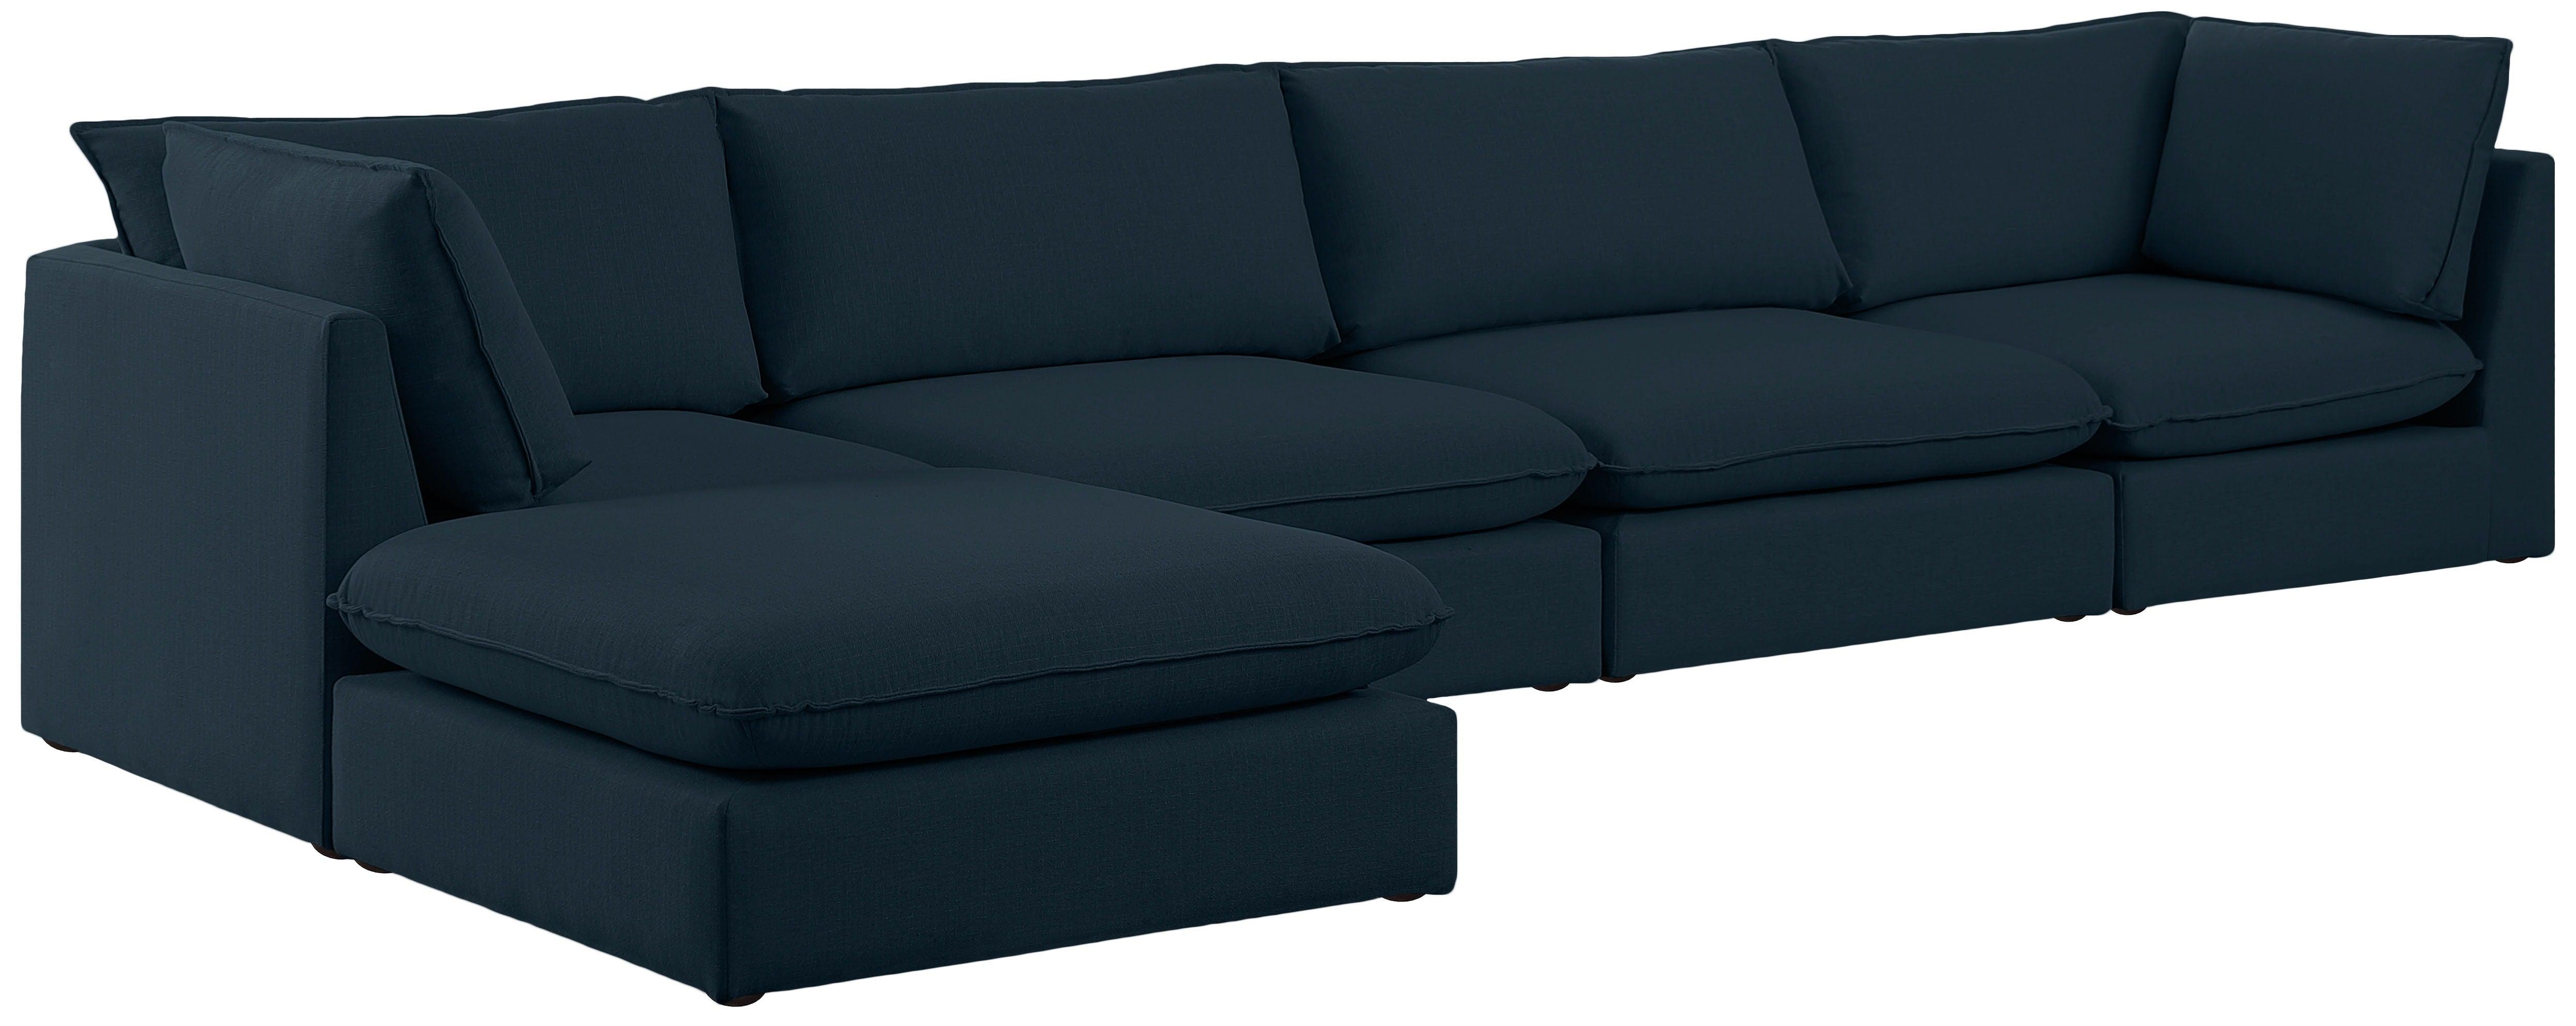 Meridian Furniture - Mackenzie - Modular Sectional 5 Piece - Navy - Fabric - Modern & Contemporary - 5th Avenue Furniture